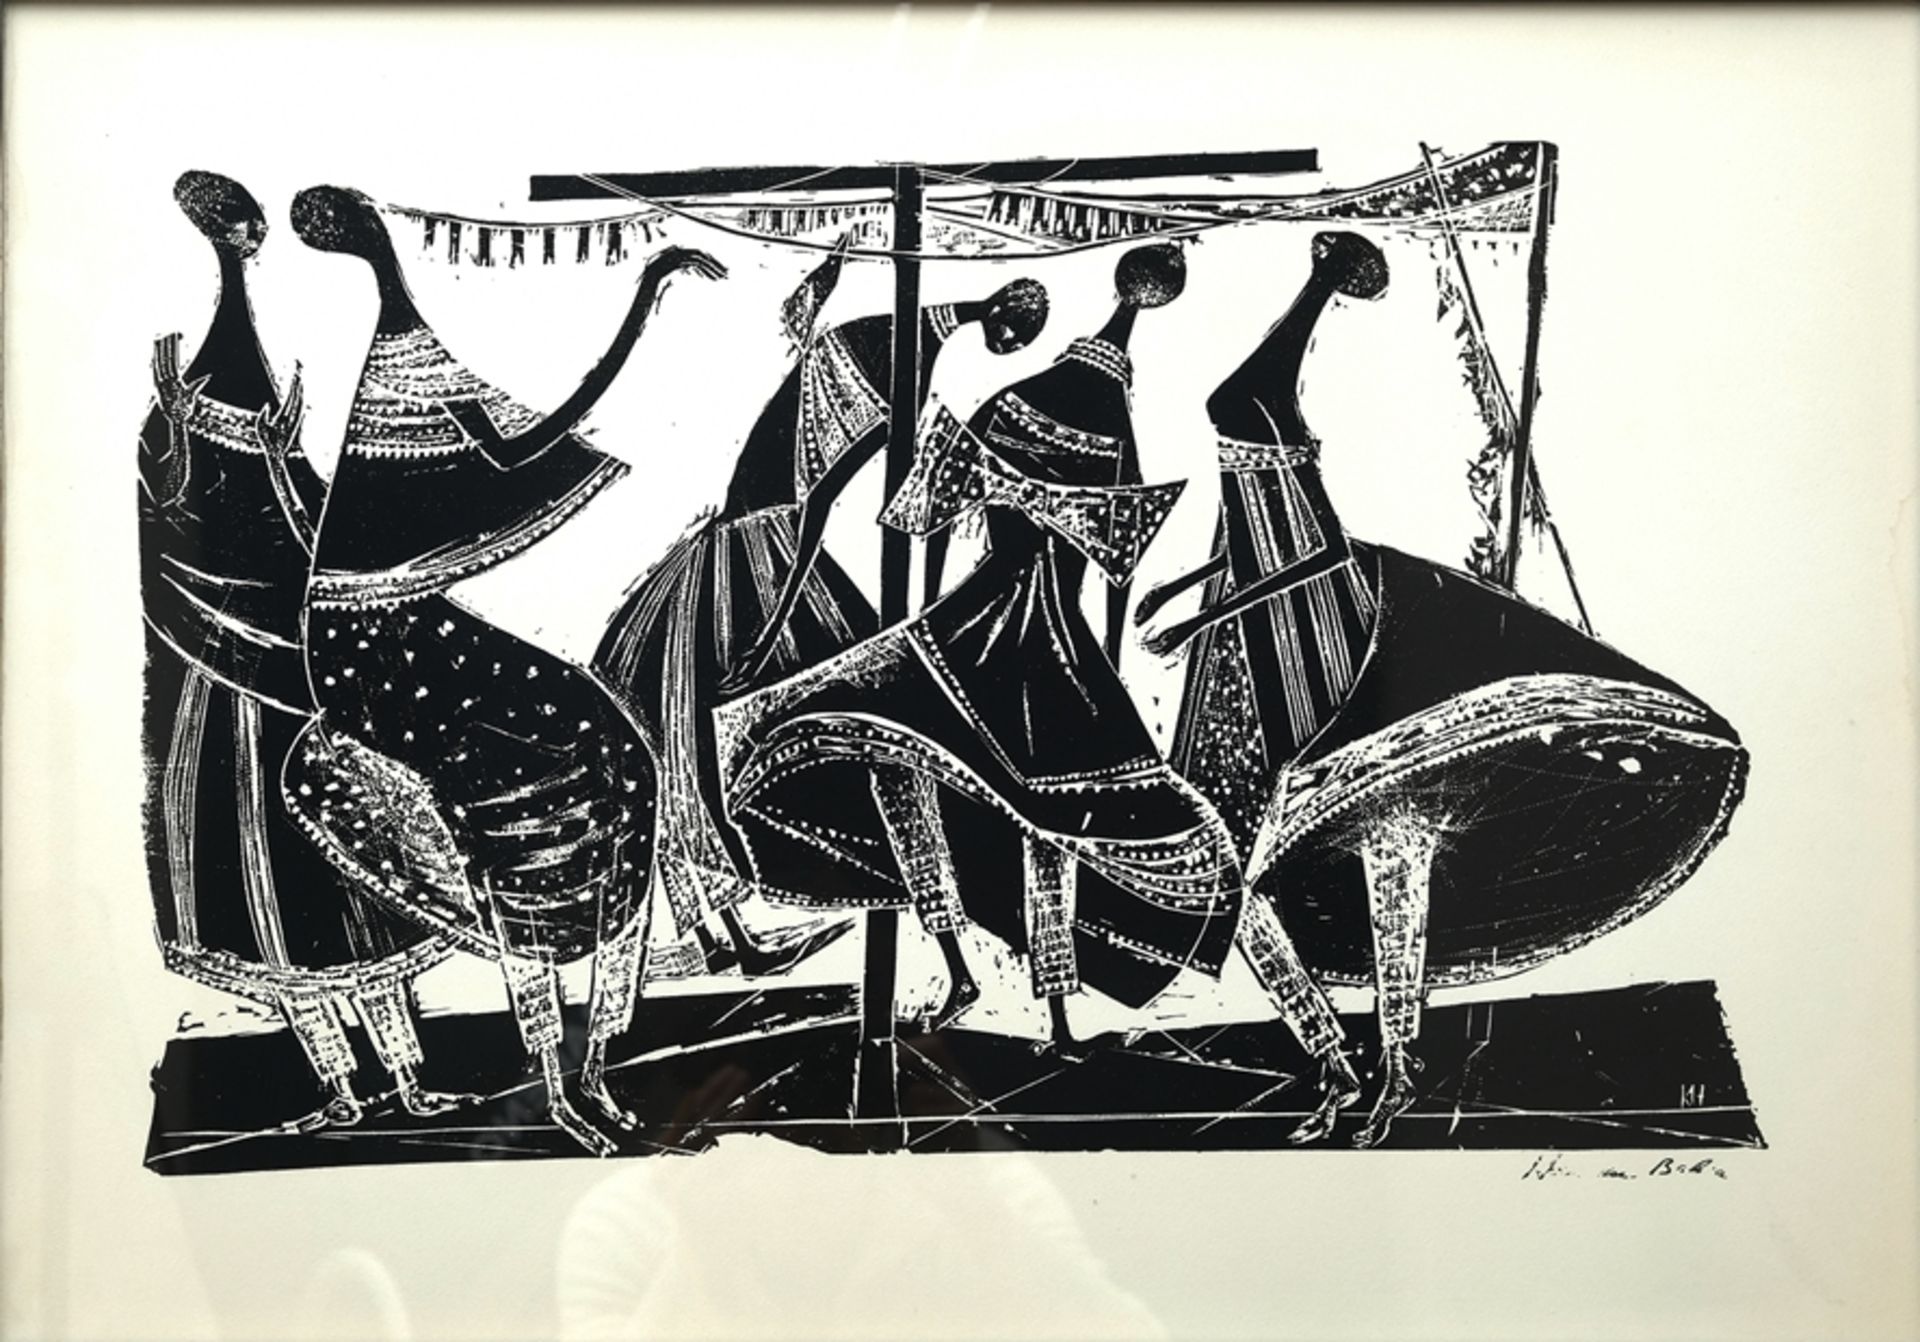 Hansen-Bahia, Karl Heinz (1915-1978) "Der große Candomblé", 1959, woodcut.